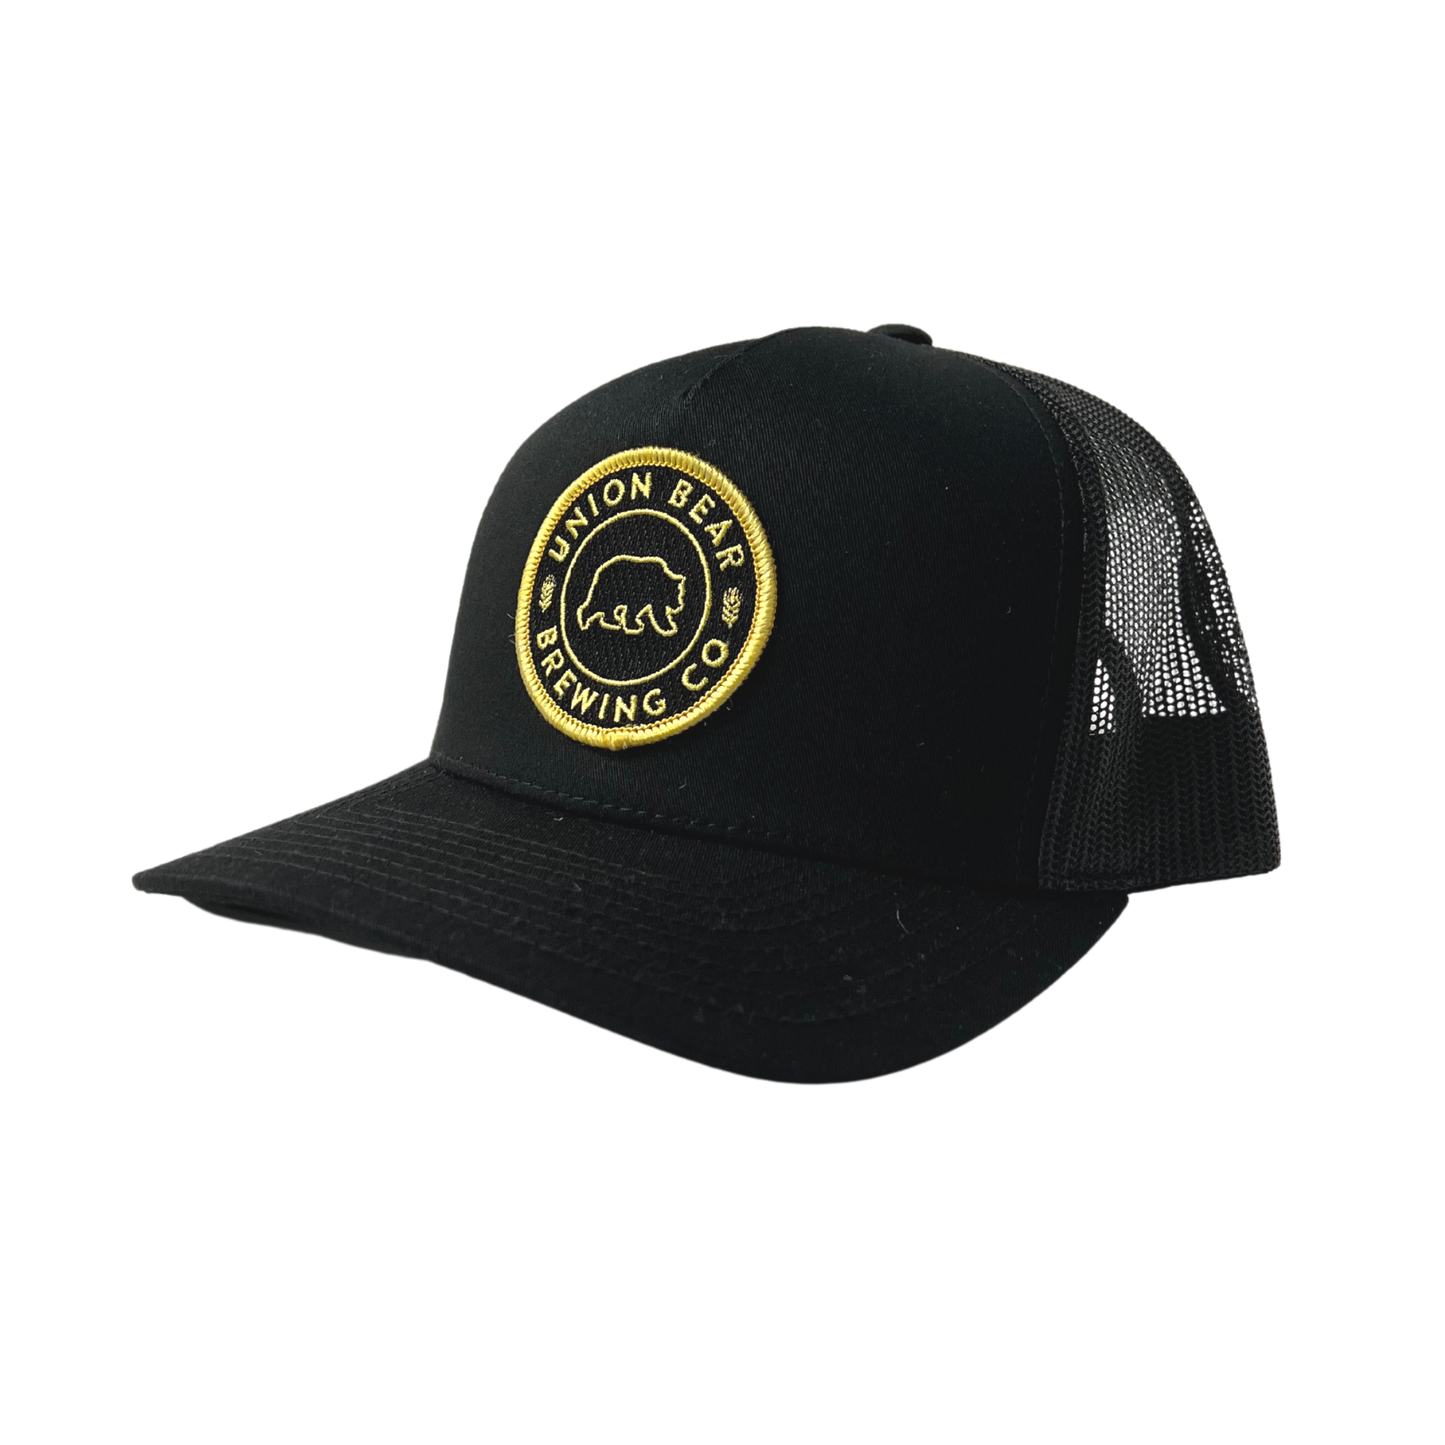 Circle Patch Trucker Hat - Black